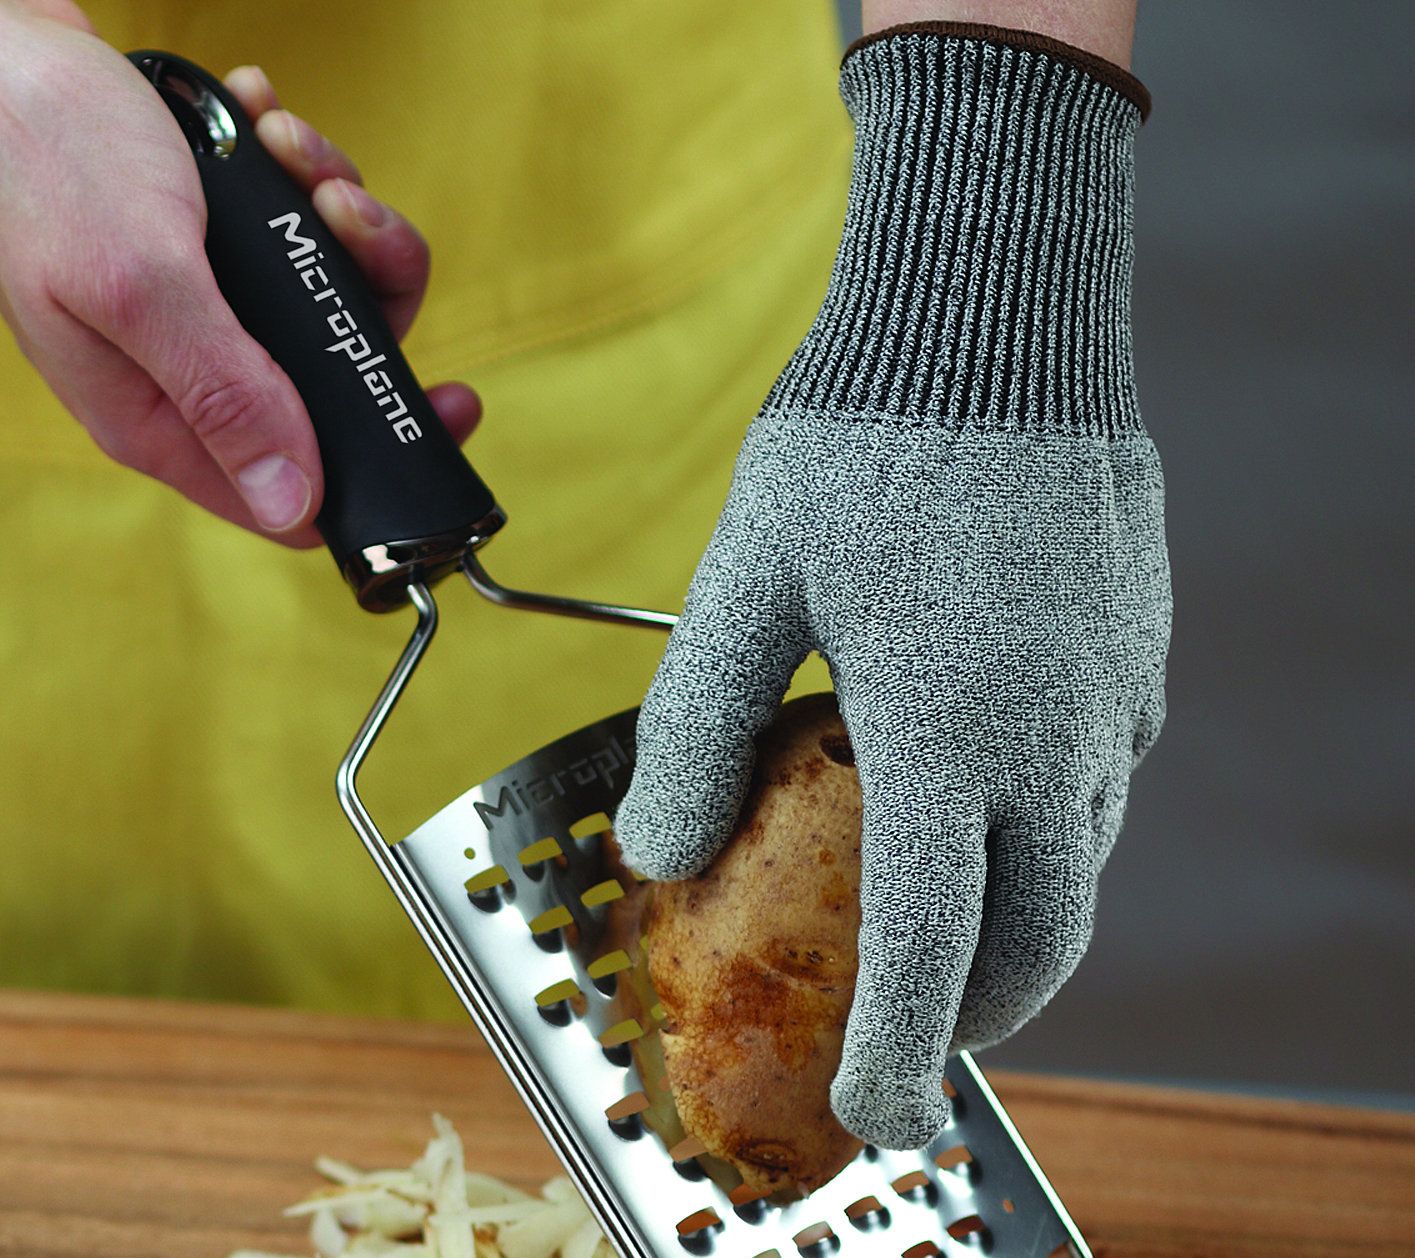 Microplane® Cut Resistant Glove